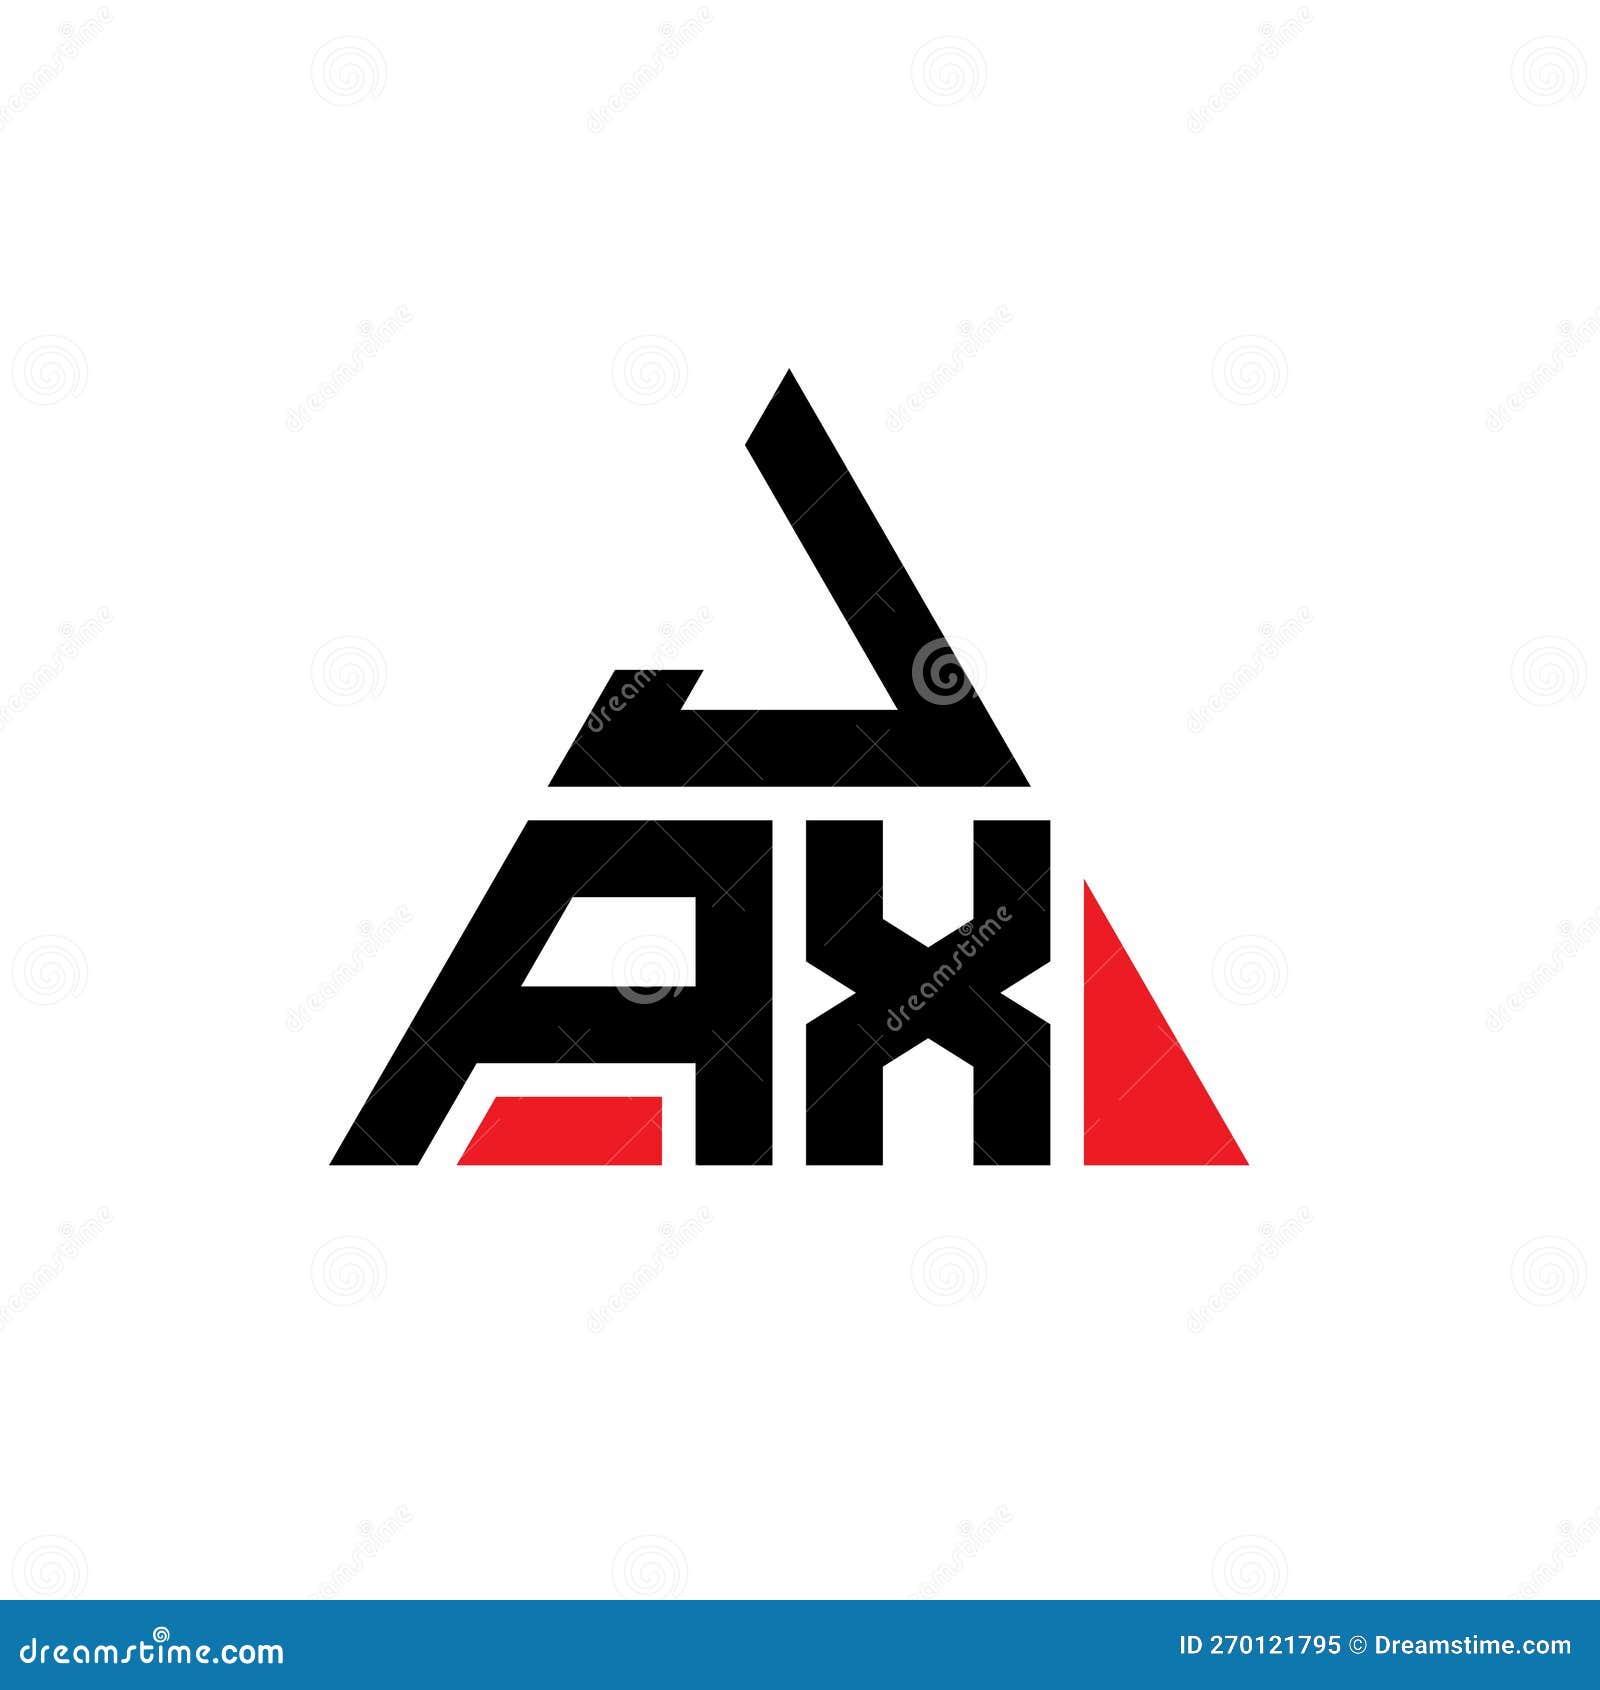 jax triangle letter logo  with triangle . jax triangle logo  monogram. jax triangle  logo template with red